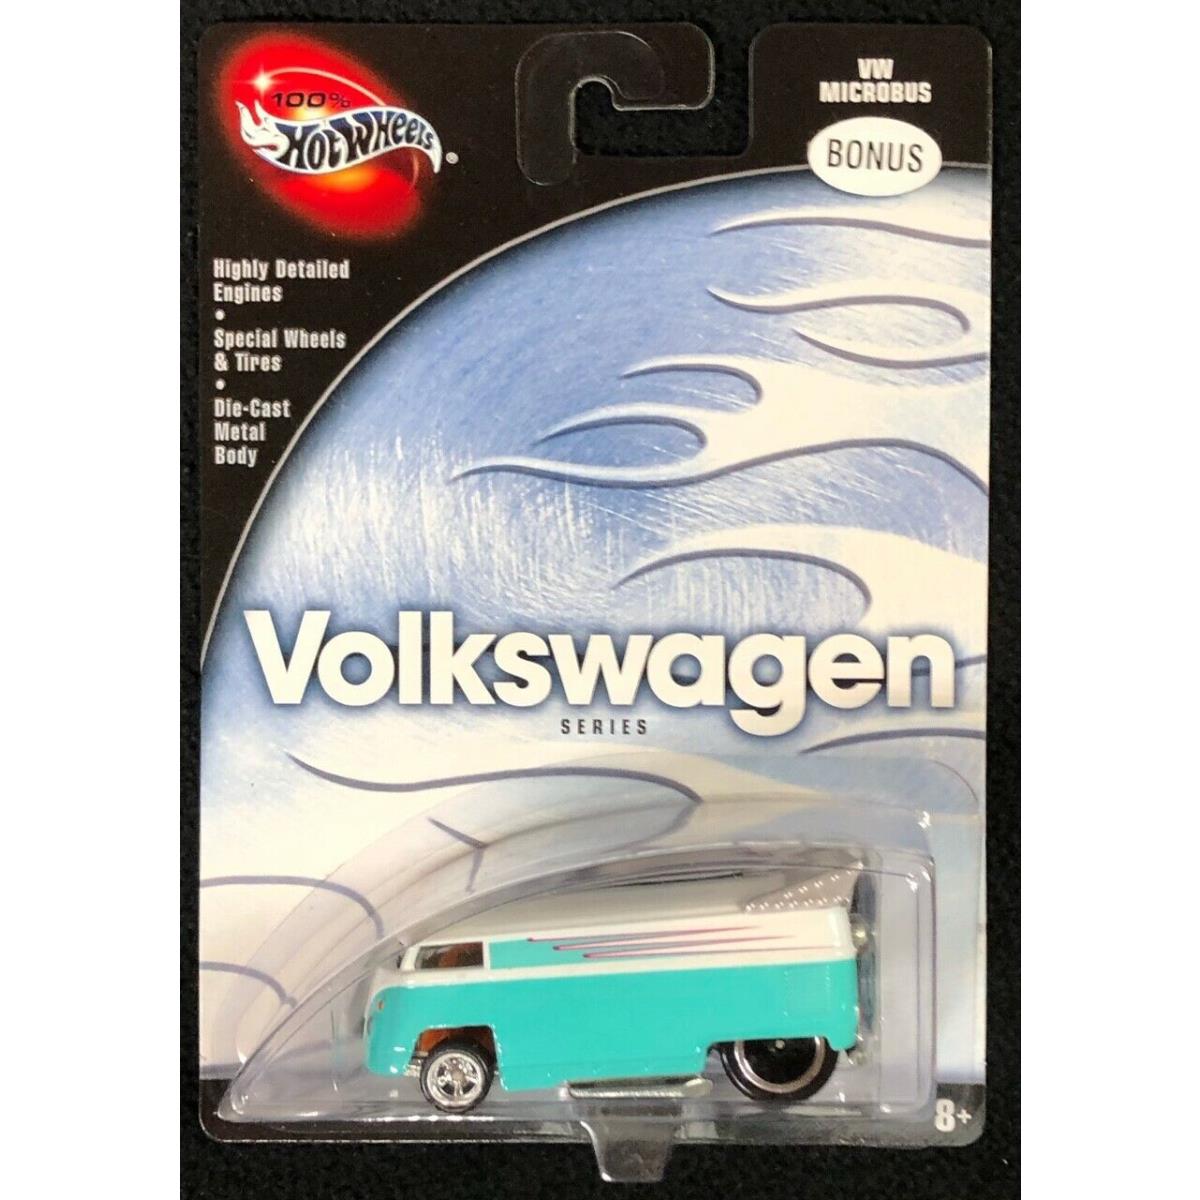 Hot Wheels Volkswagen Series VW Micro Bus Bonus Teal and White